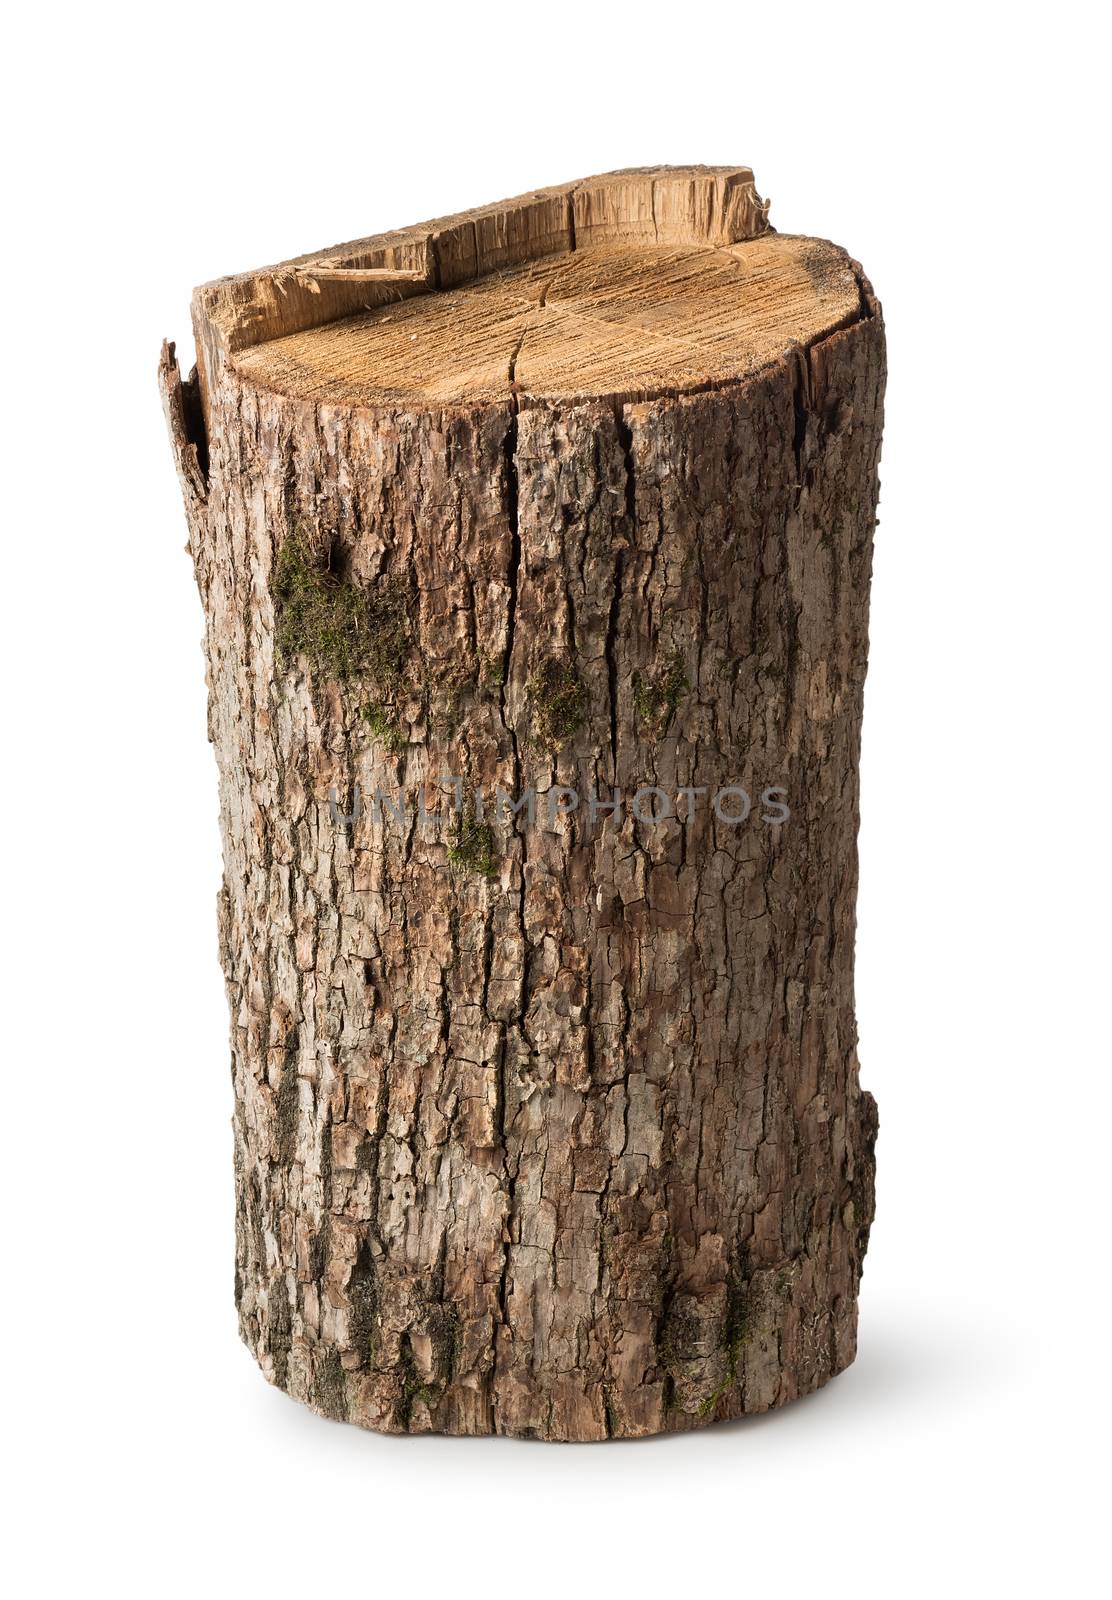 Big stump by Givaga